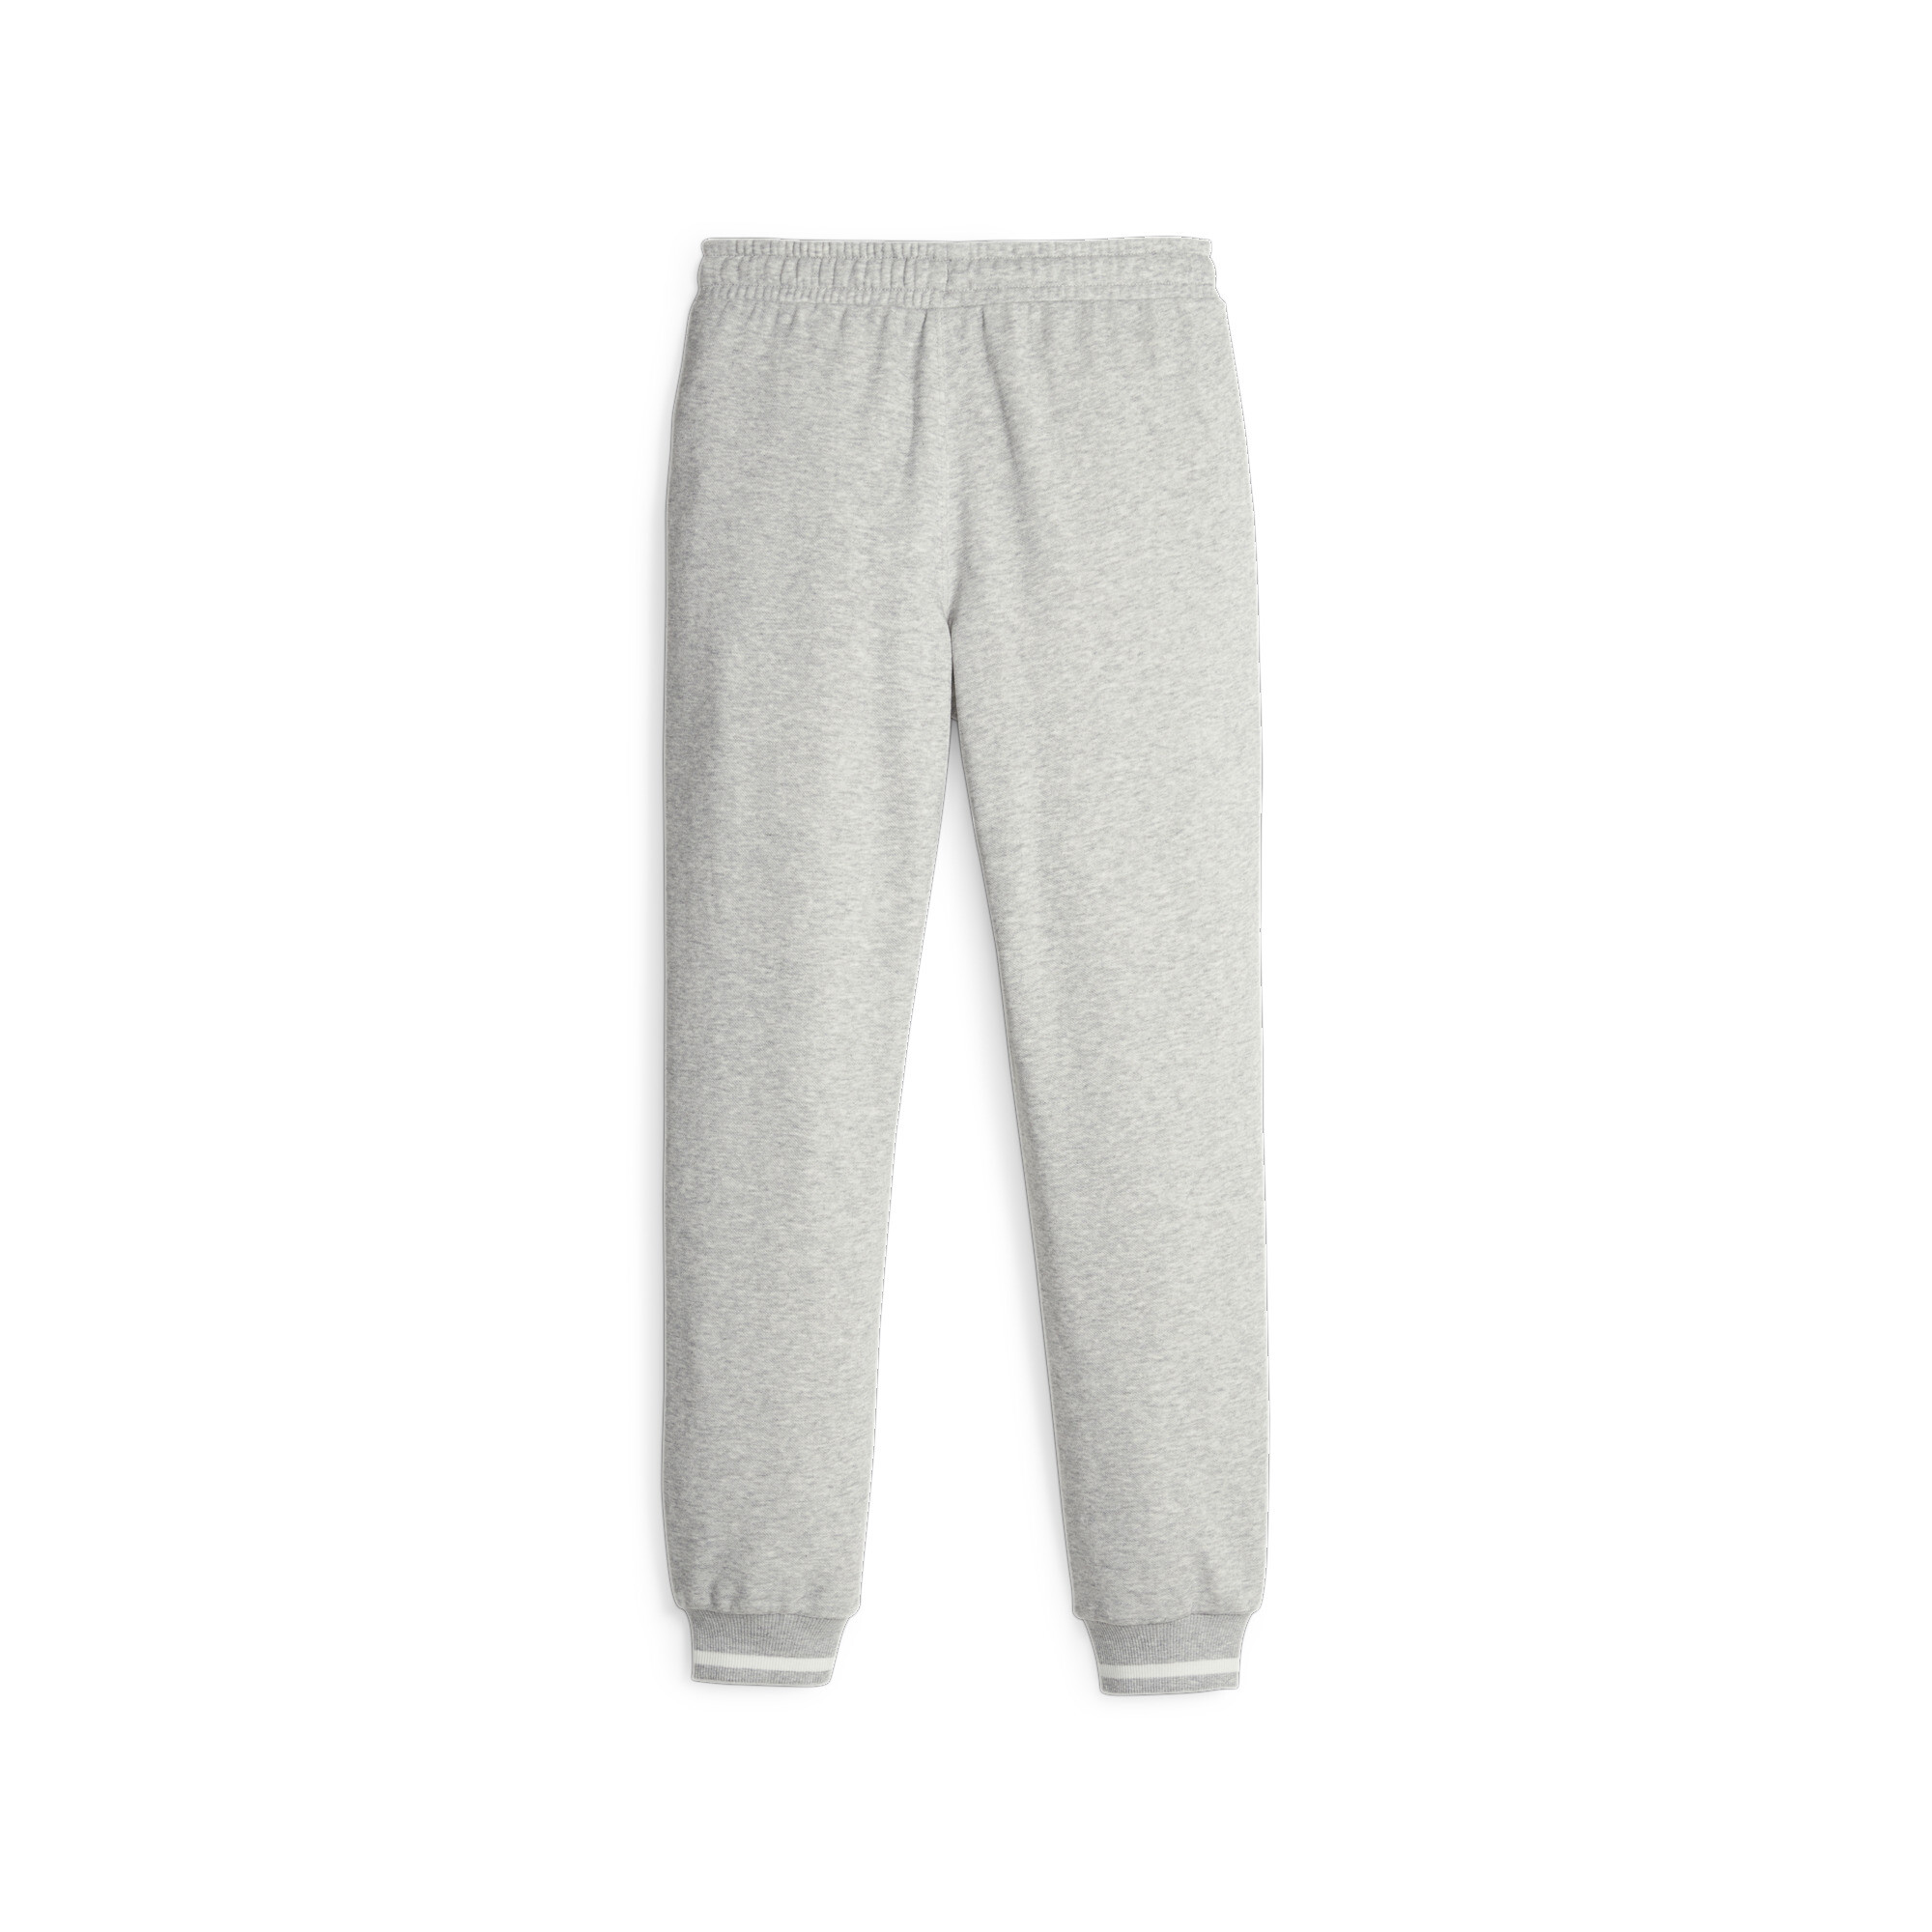 Women's Puma SQUAD Youth Sweatpants, Gray, Size 15-16Y, Clothing